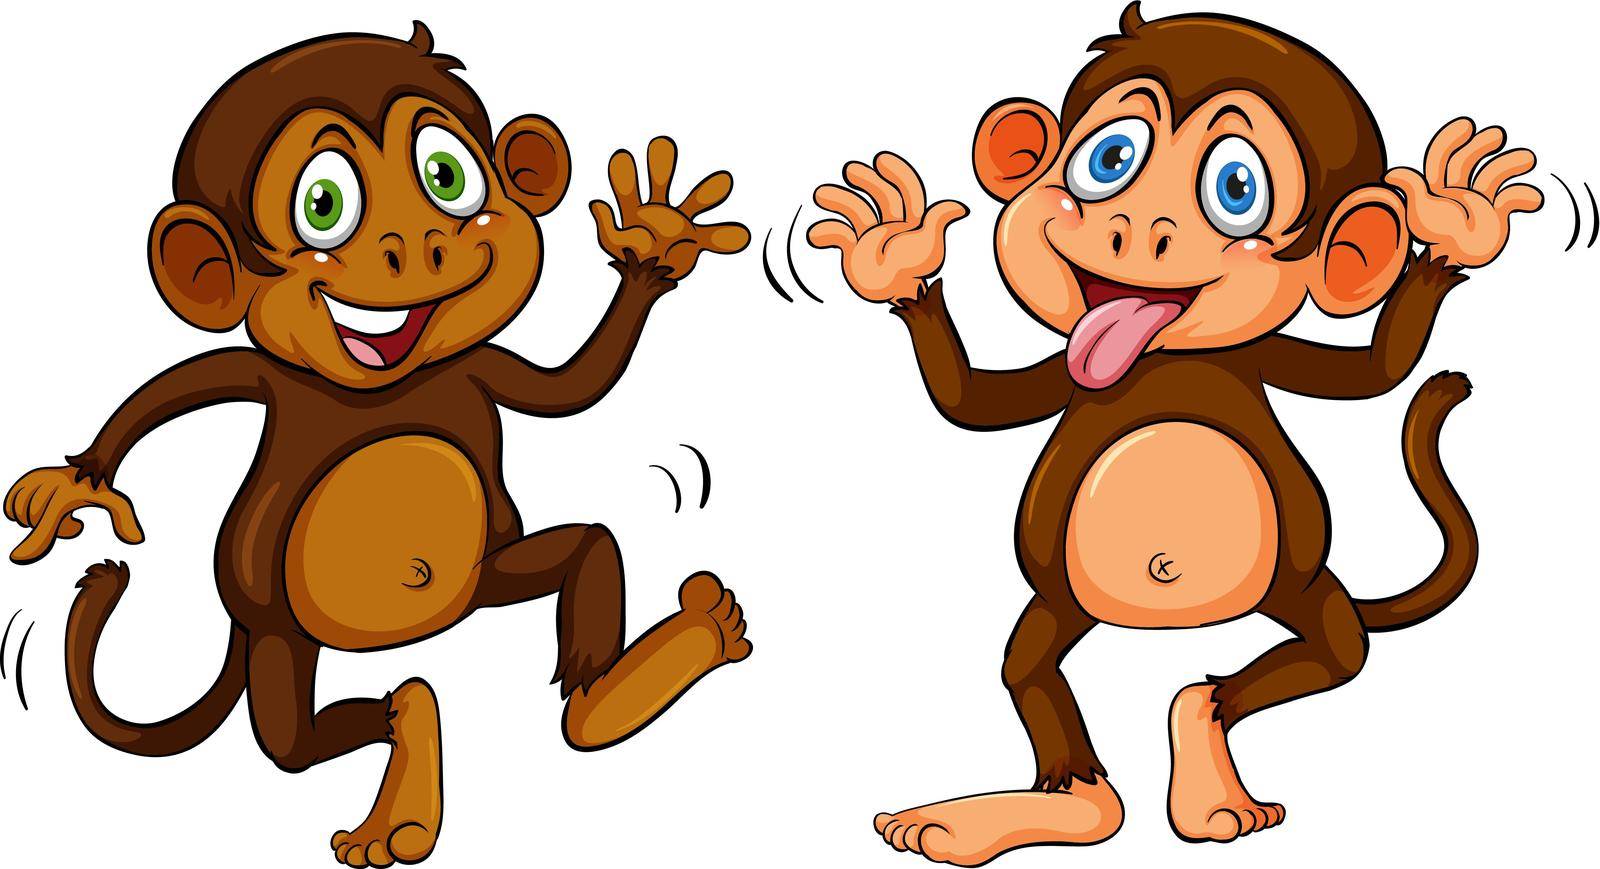 Two monkeys by iimages